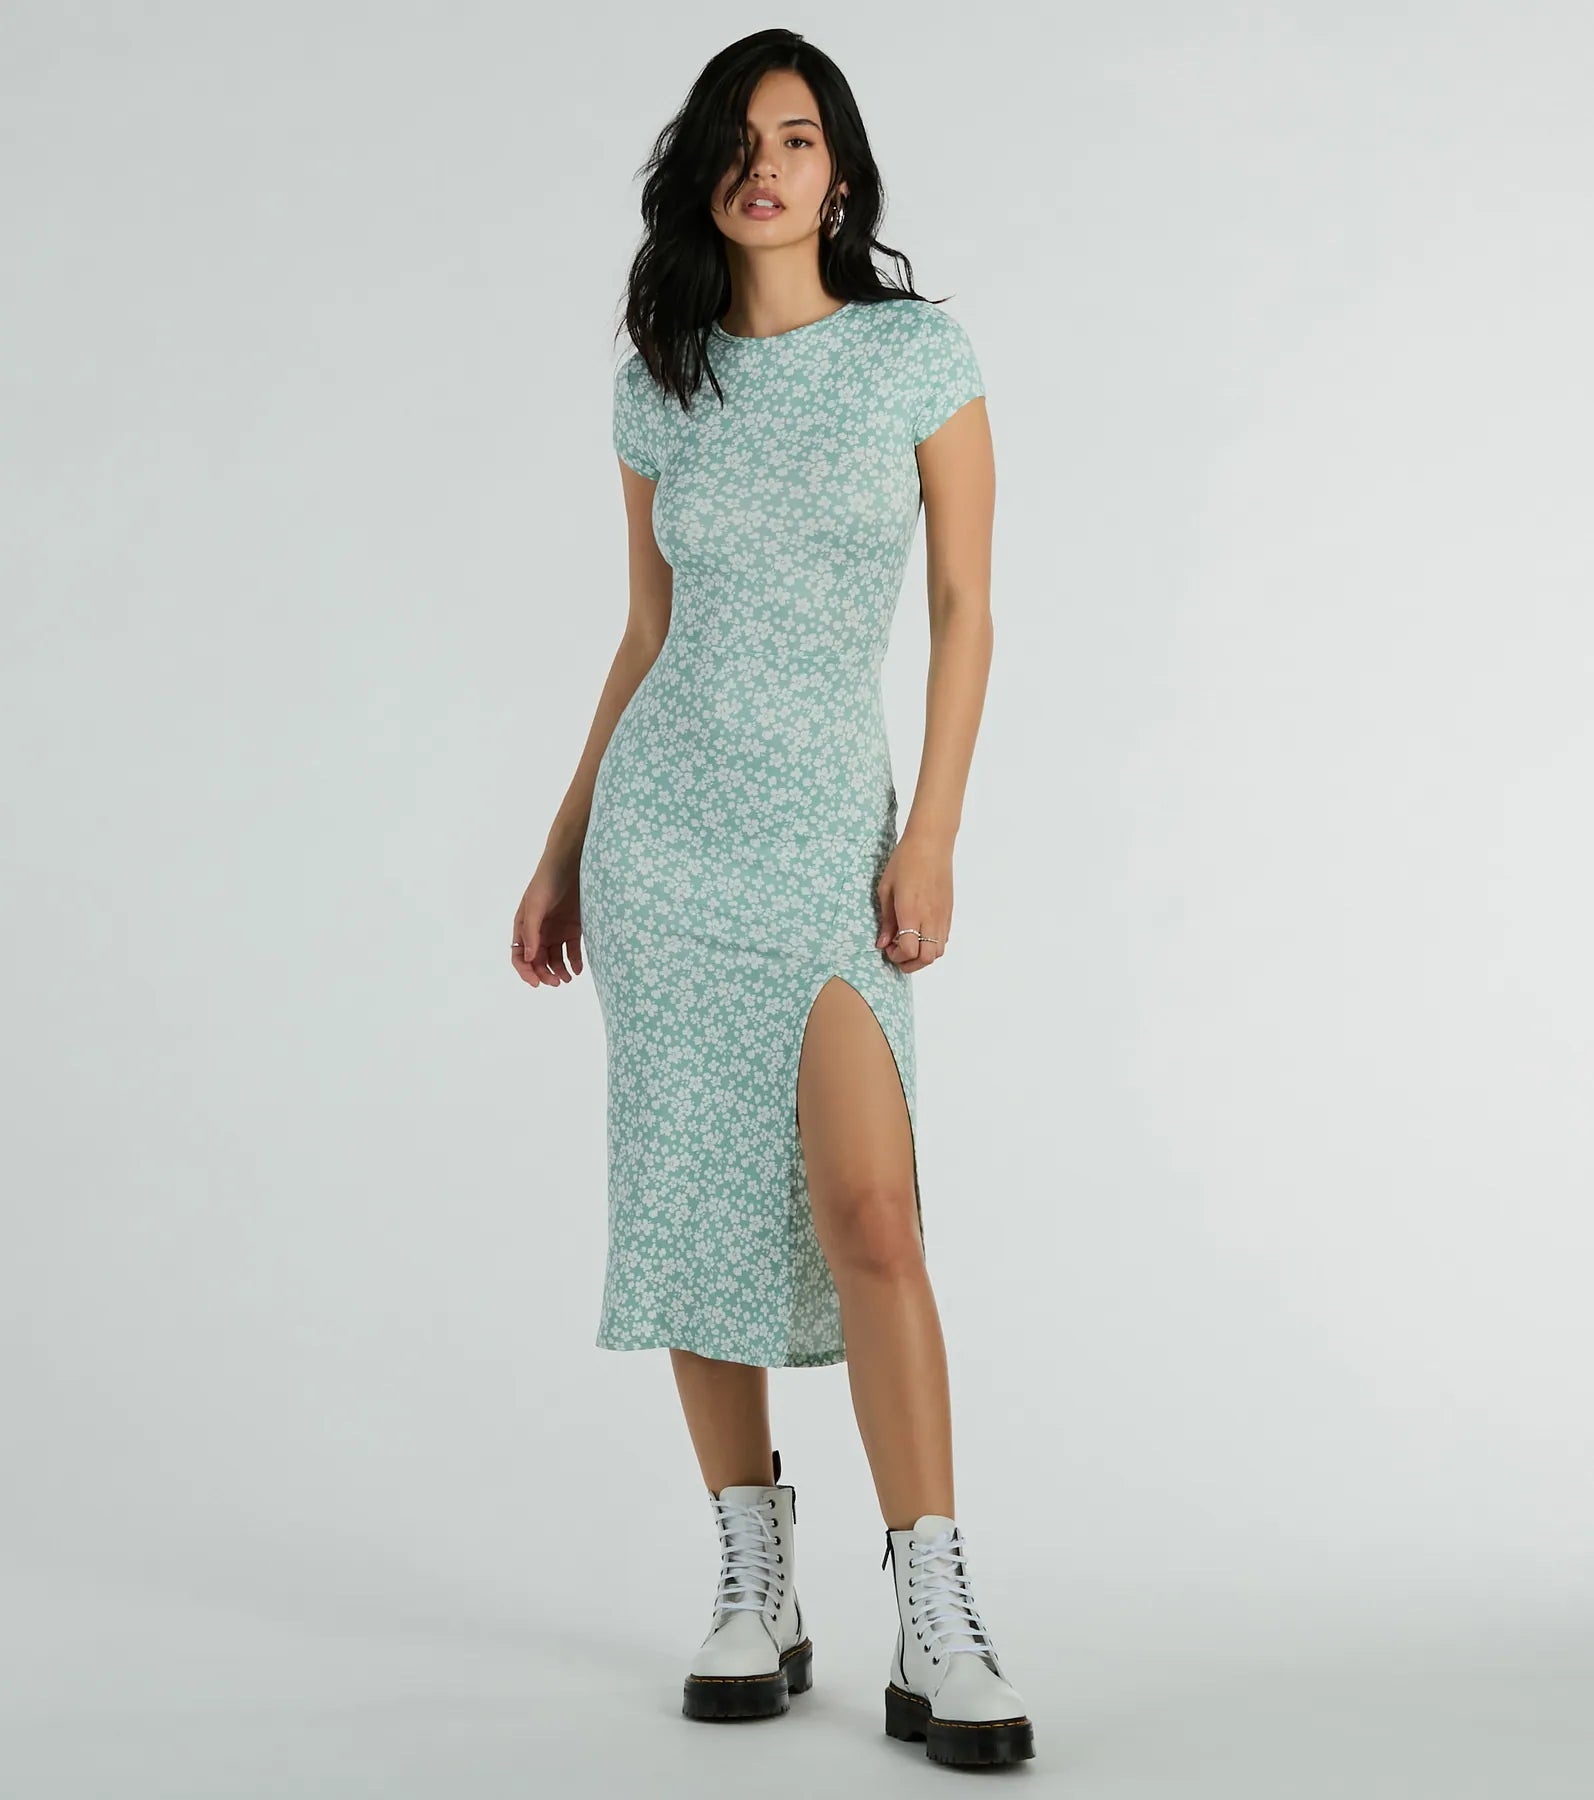 Short Sleeves Sleeves Slit Cutout Stretchy Knit Floral Print Spring Crew Neck Bodycon Dress/Midi Dress